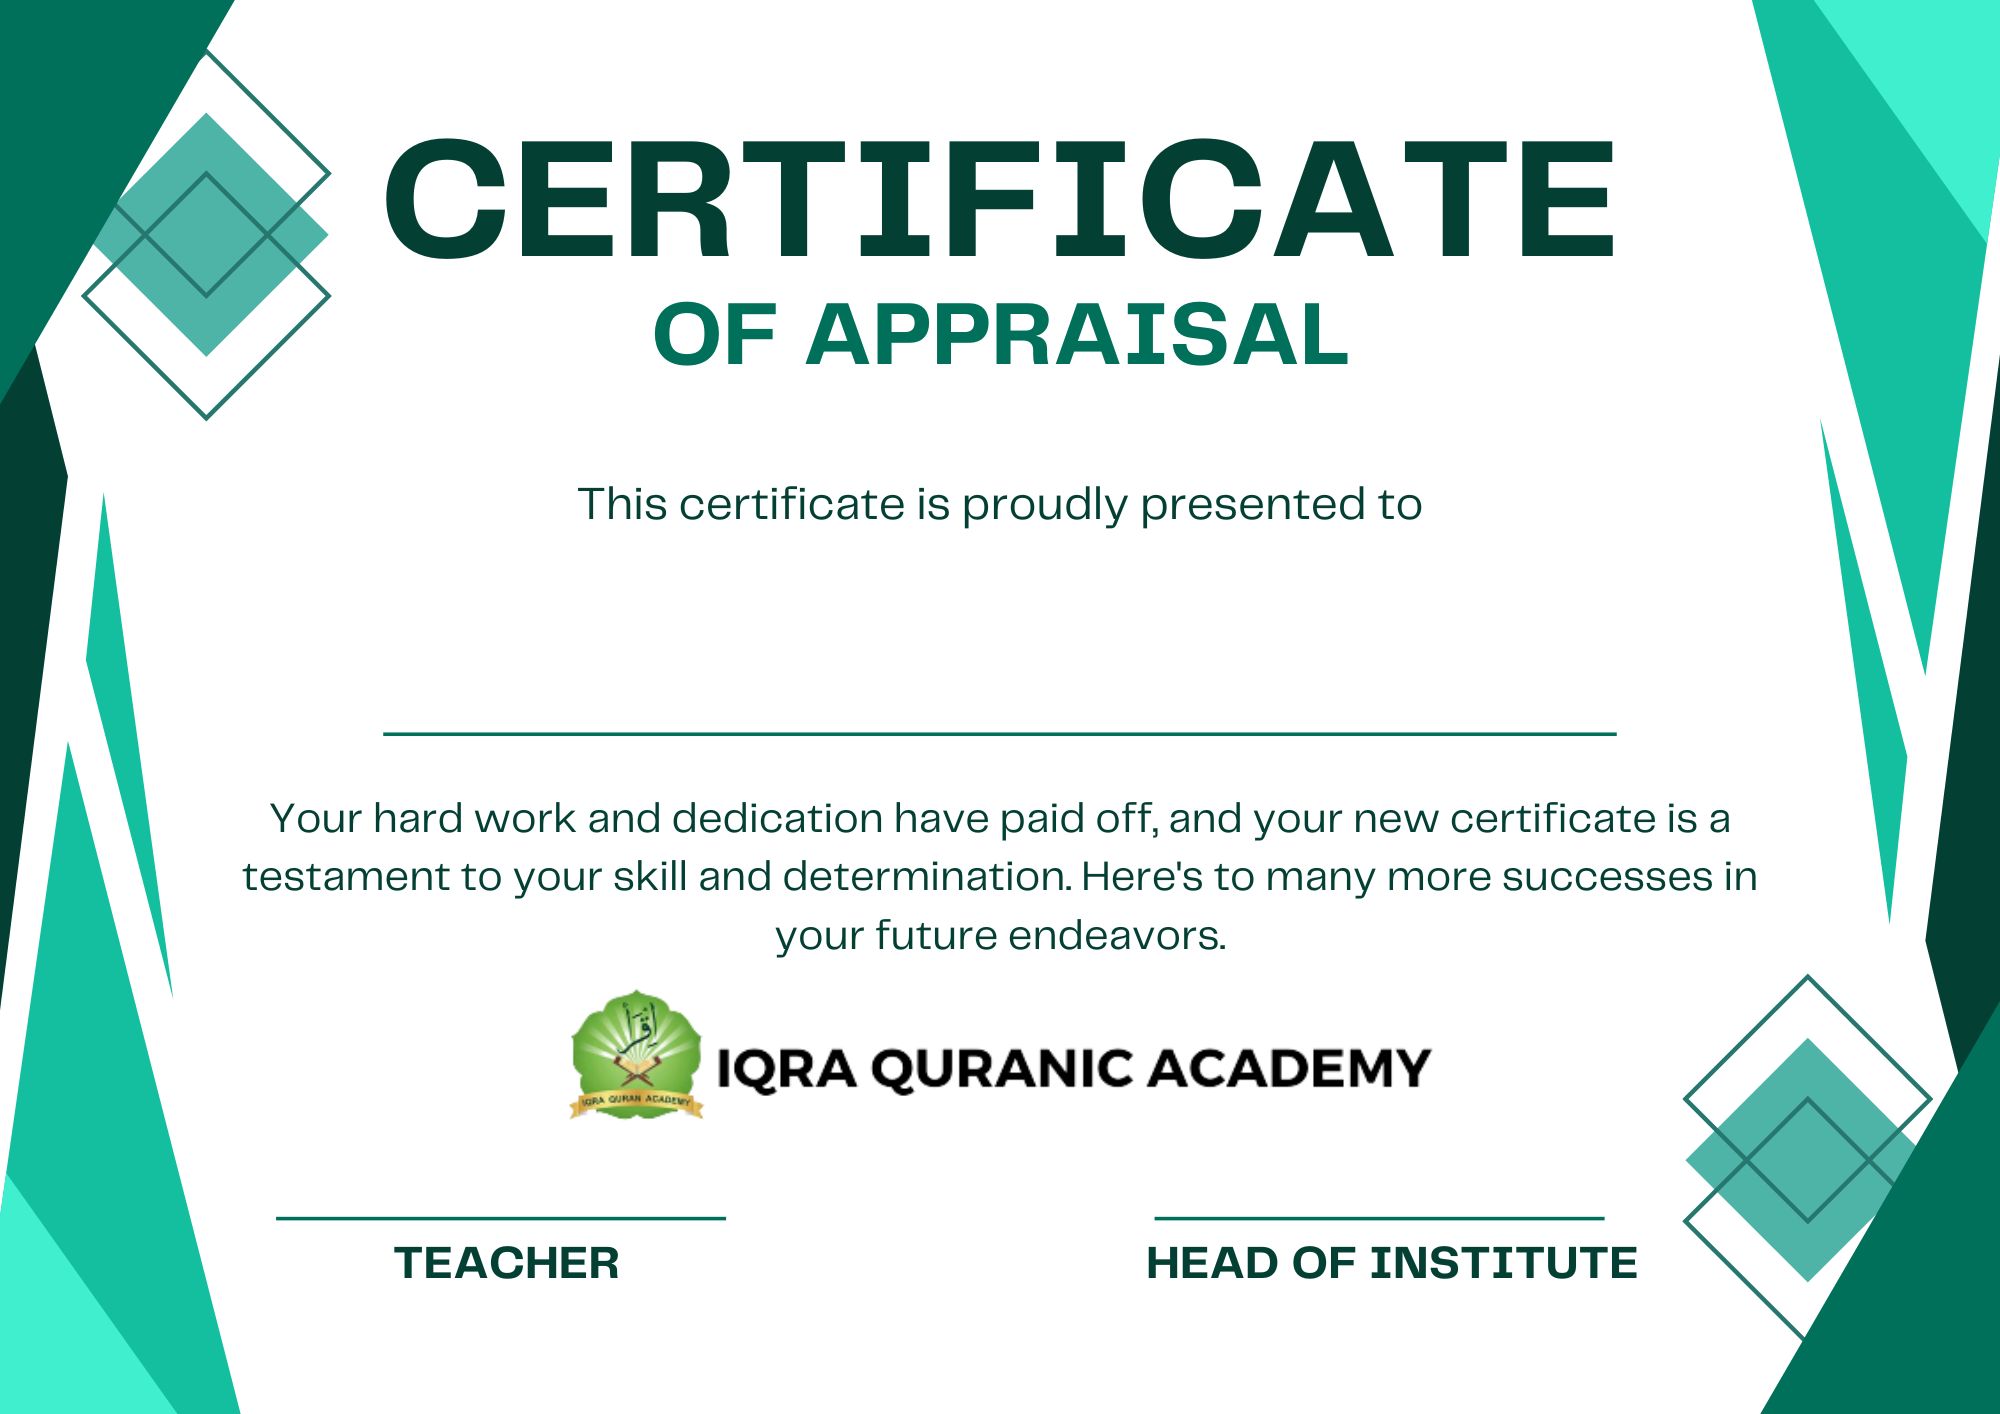 Certificate of Appraisal